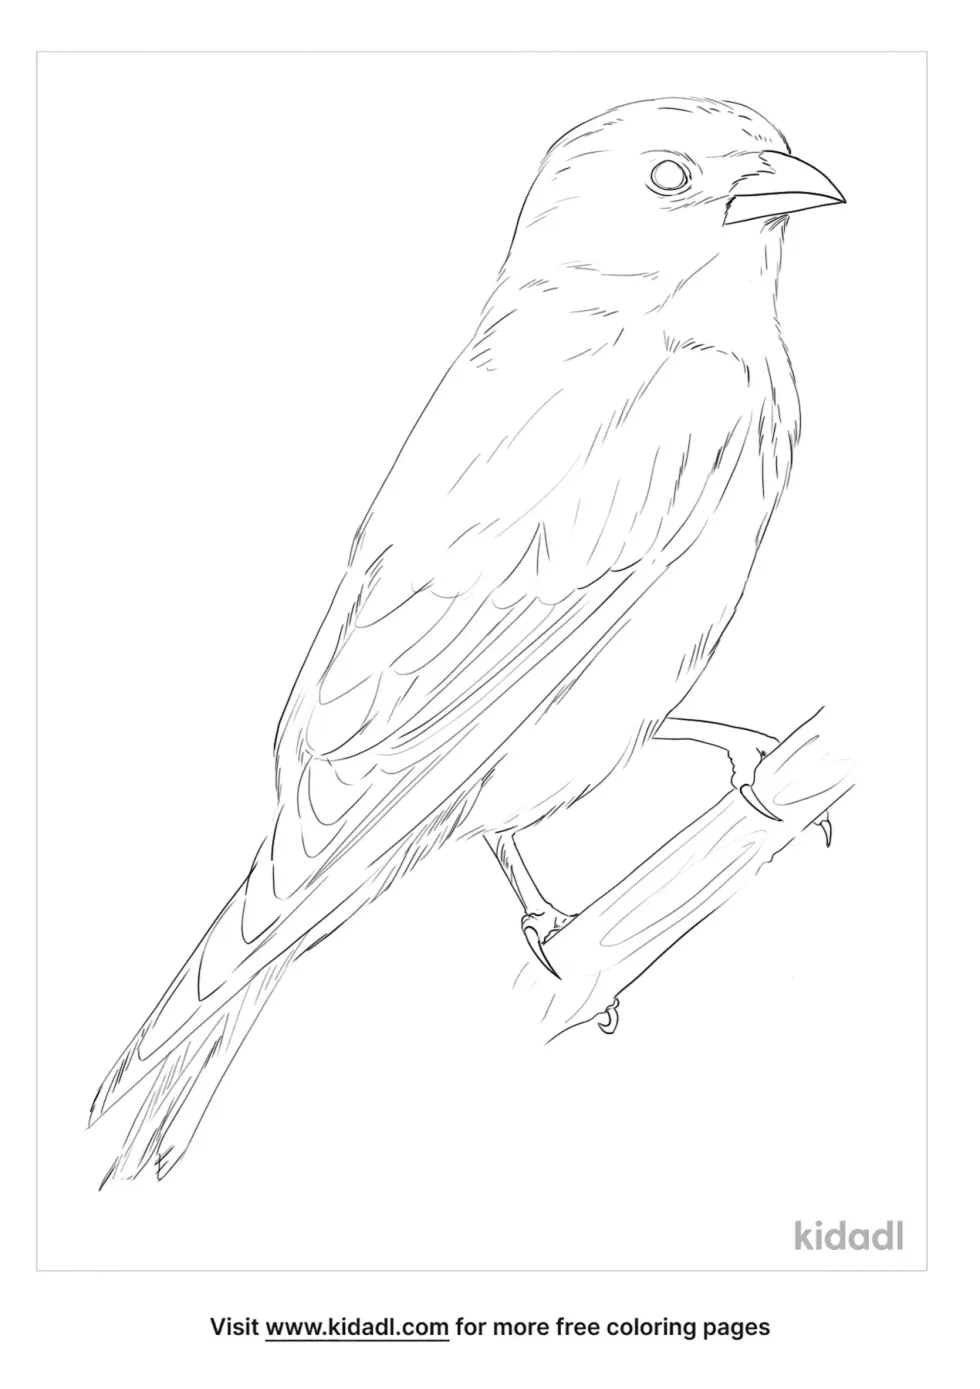 Dusky Woodswallow